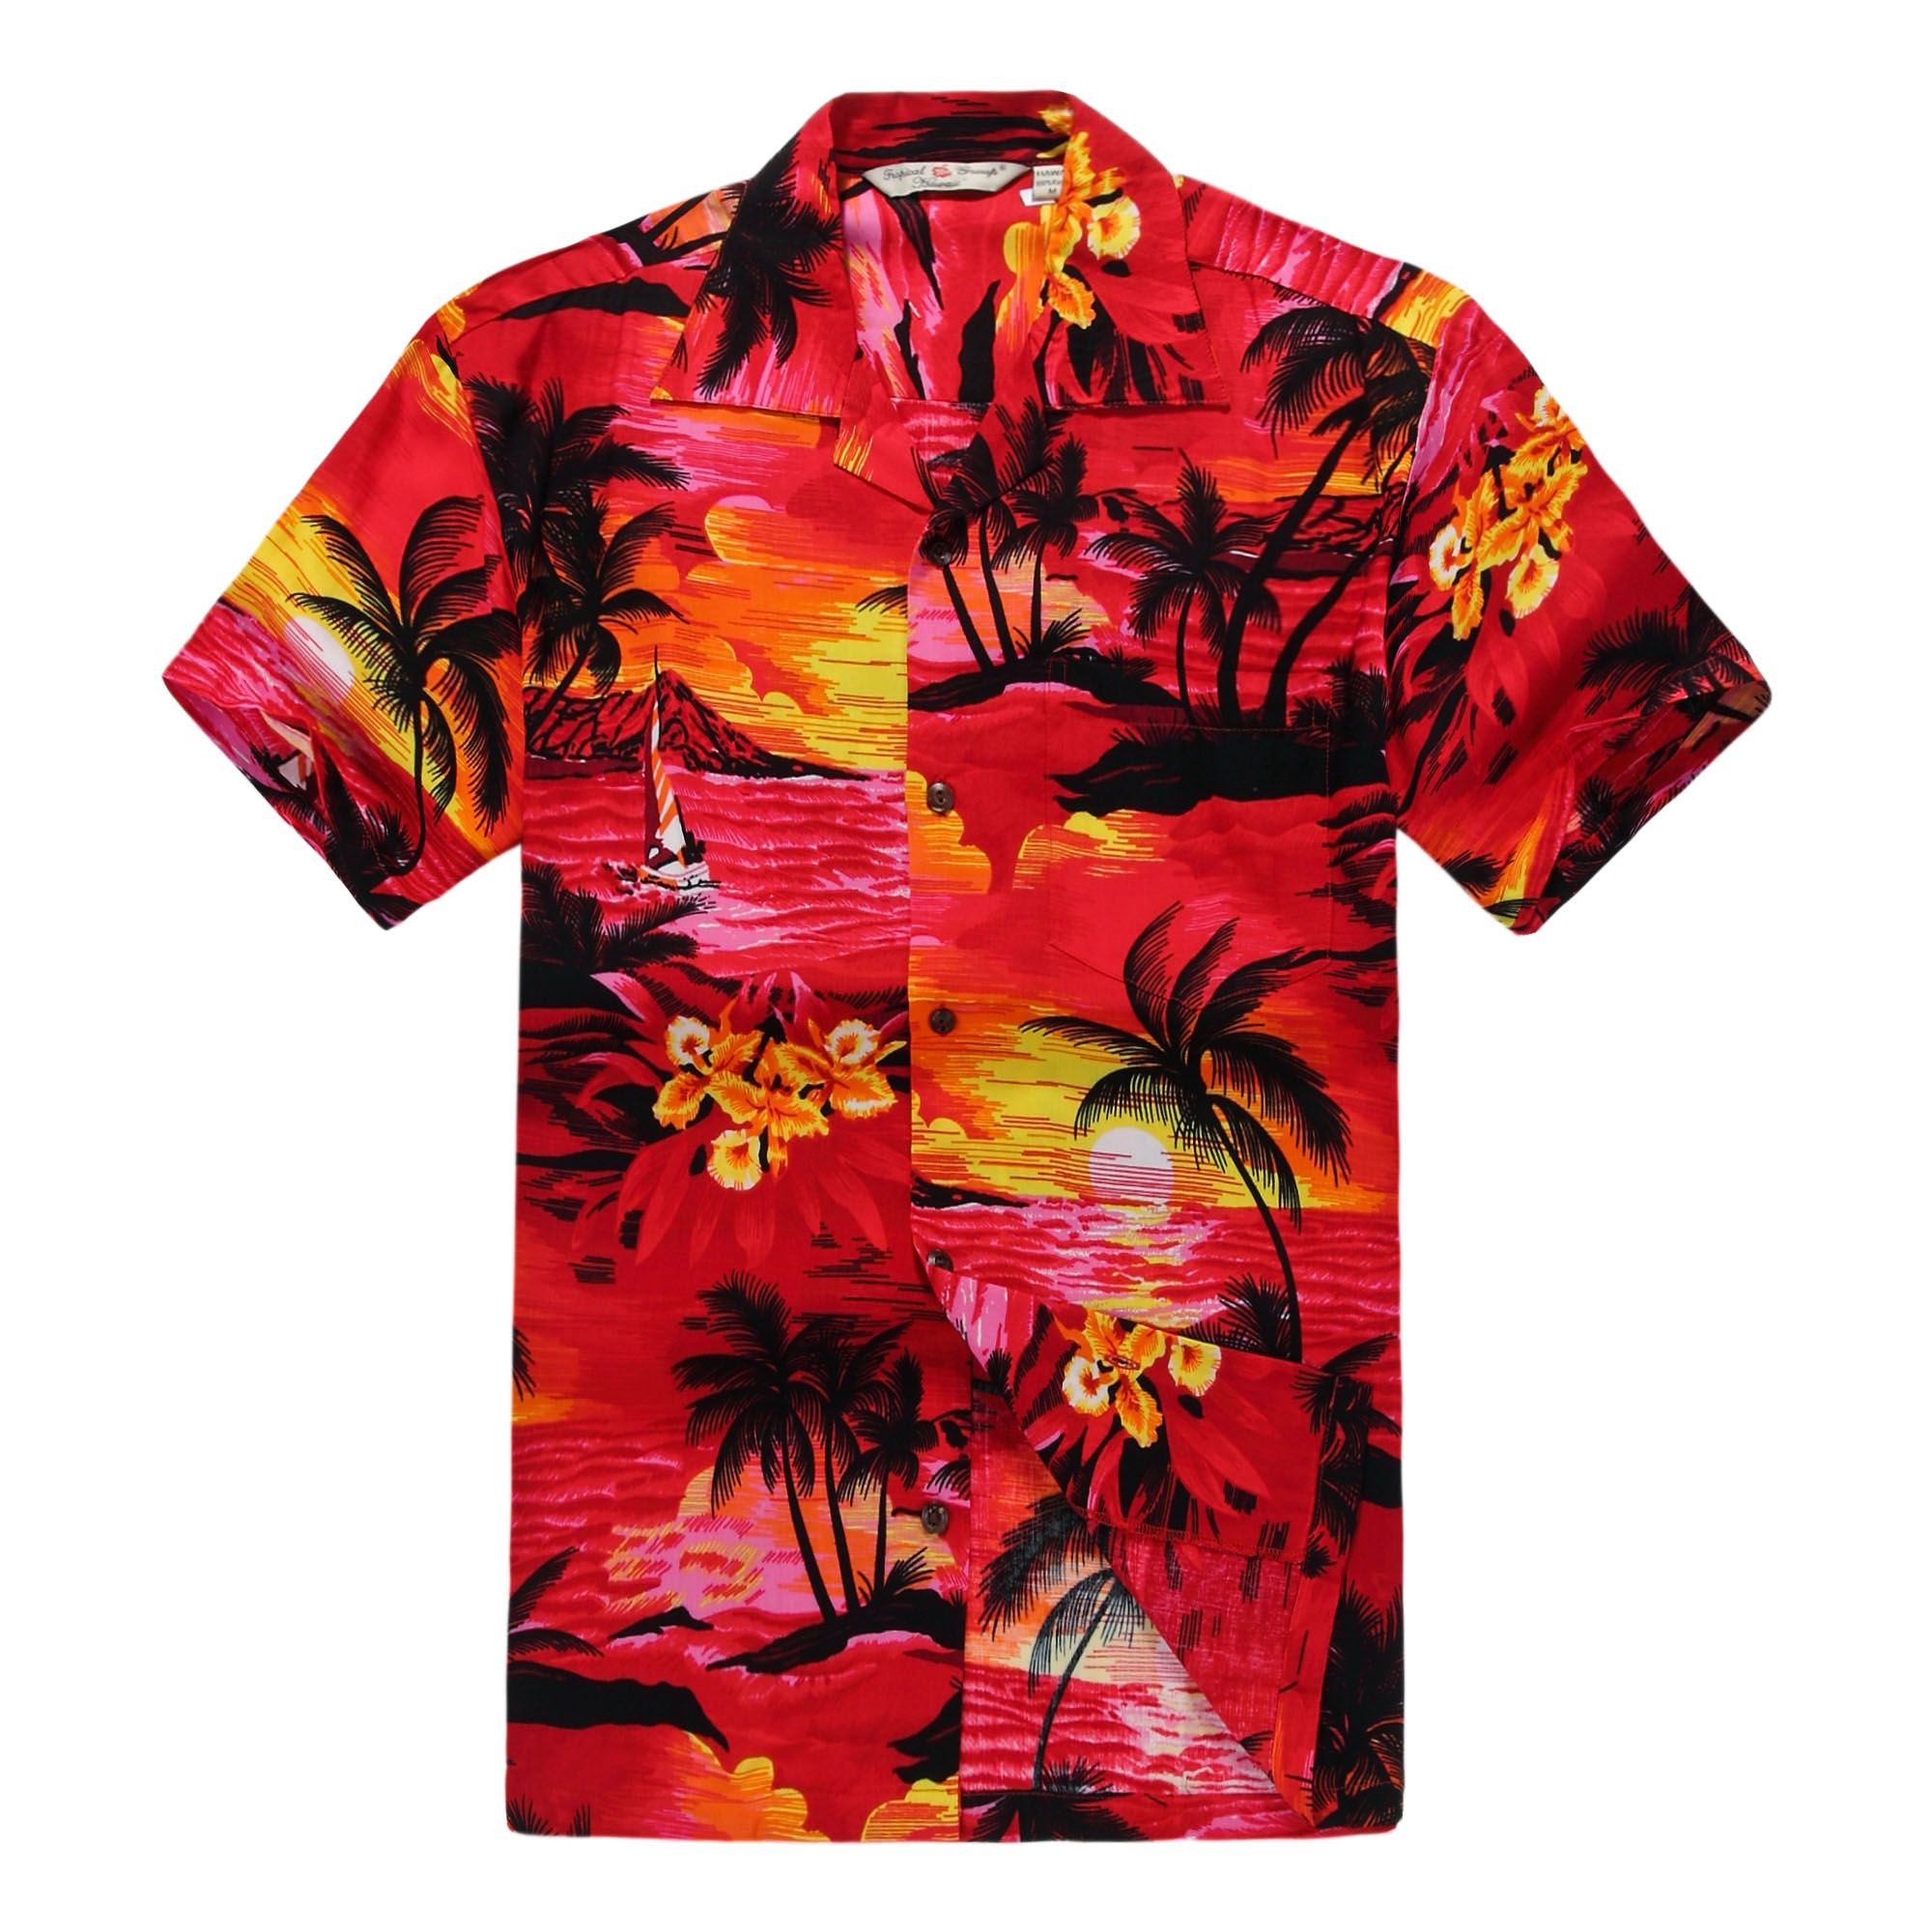 Sunset Red Amazing Design Hawaiian Shirt